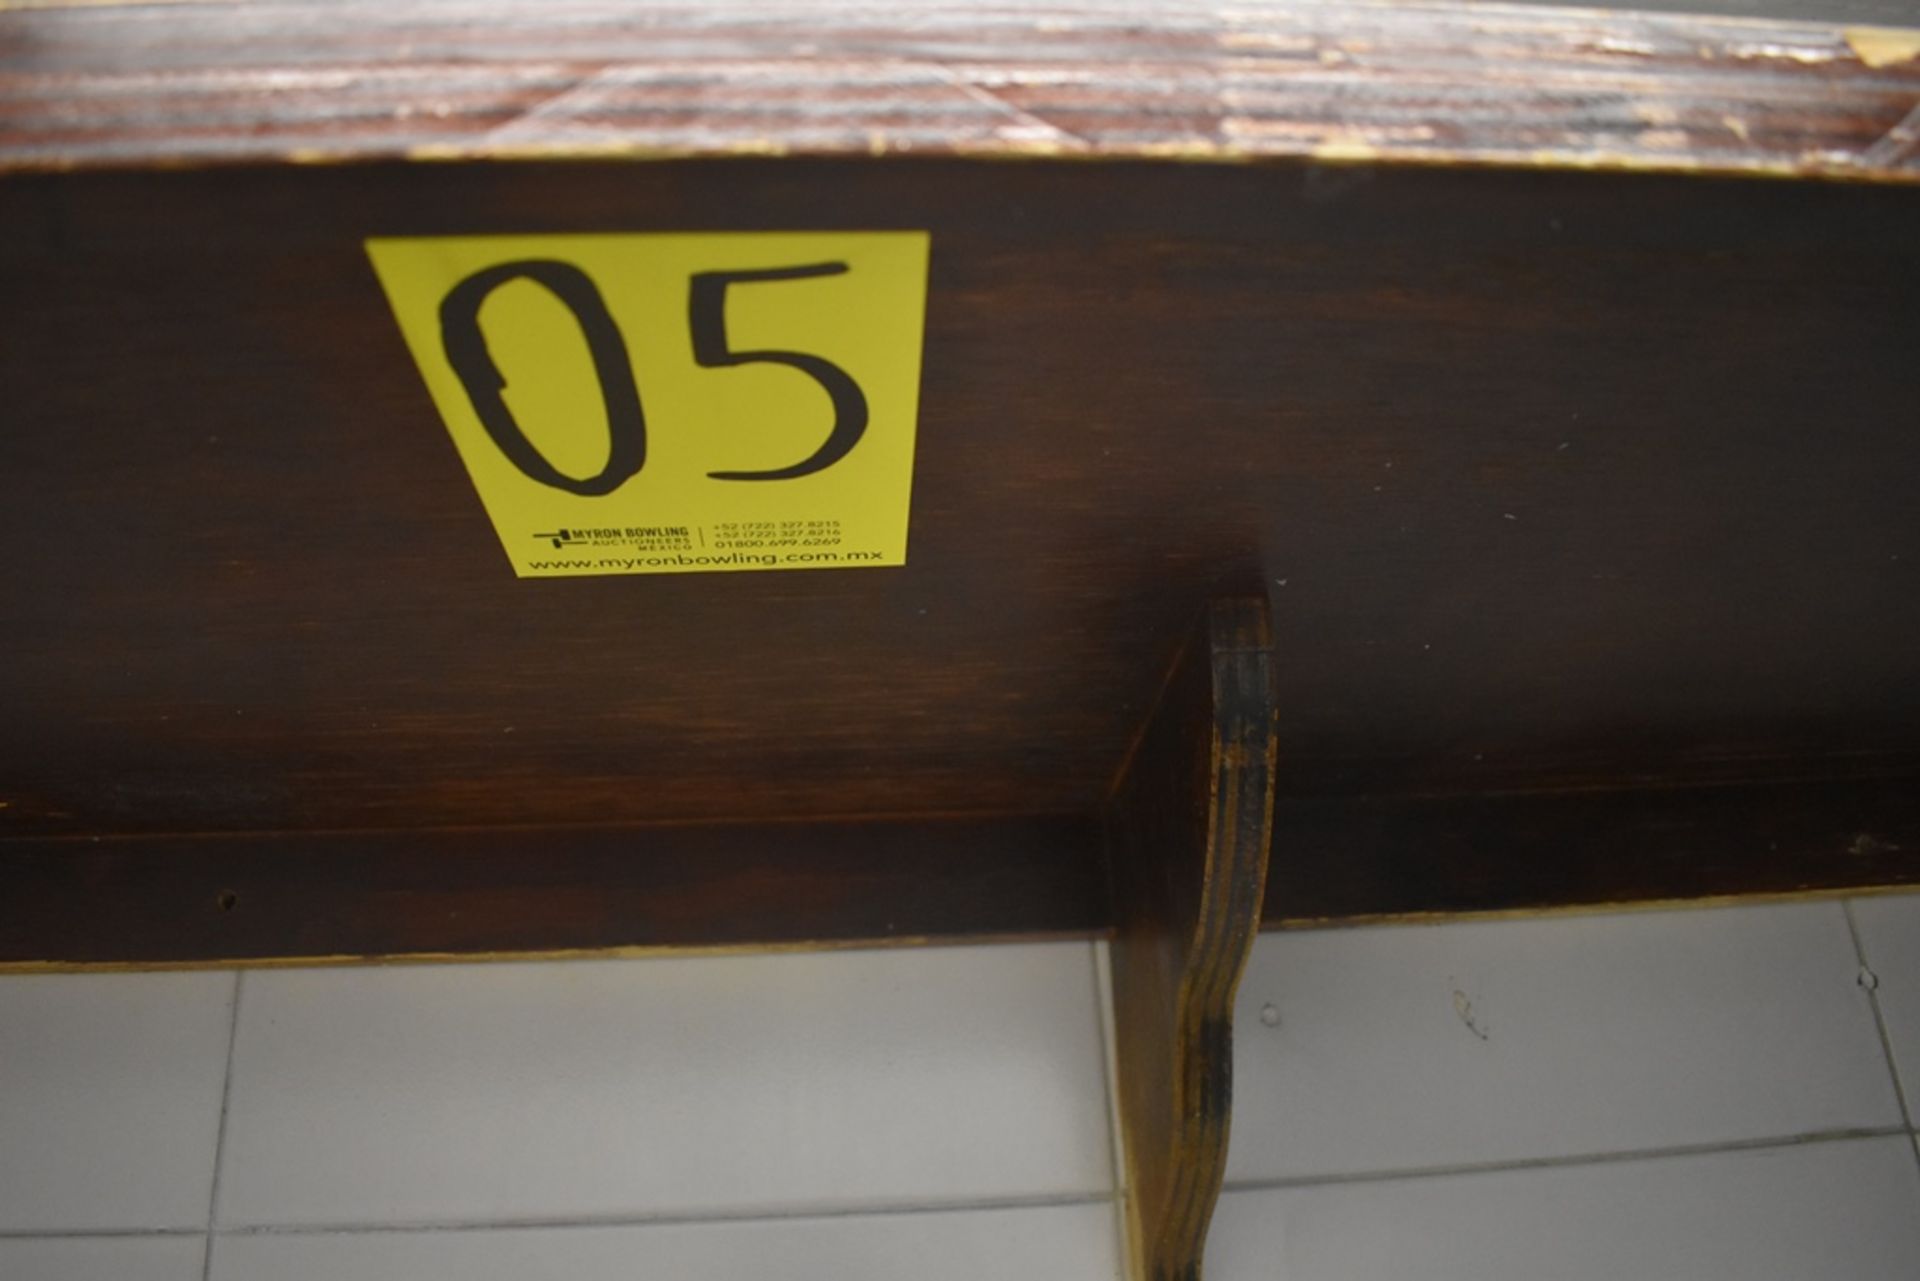 Tarja en L de 4 tinas en acero inoxidable medidas 1.85 x 0.52 x 0.78 m ; 2 Repisas de madera en L m - Image 18 of 29